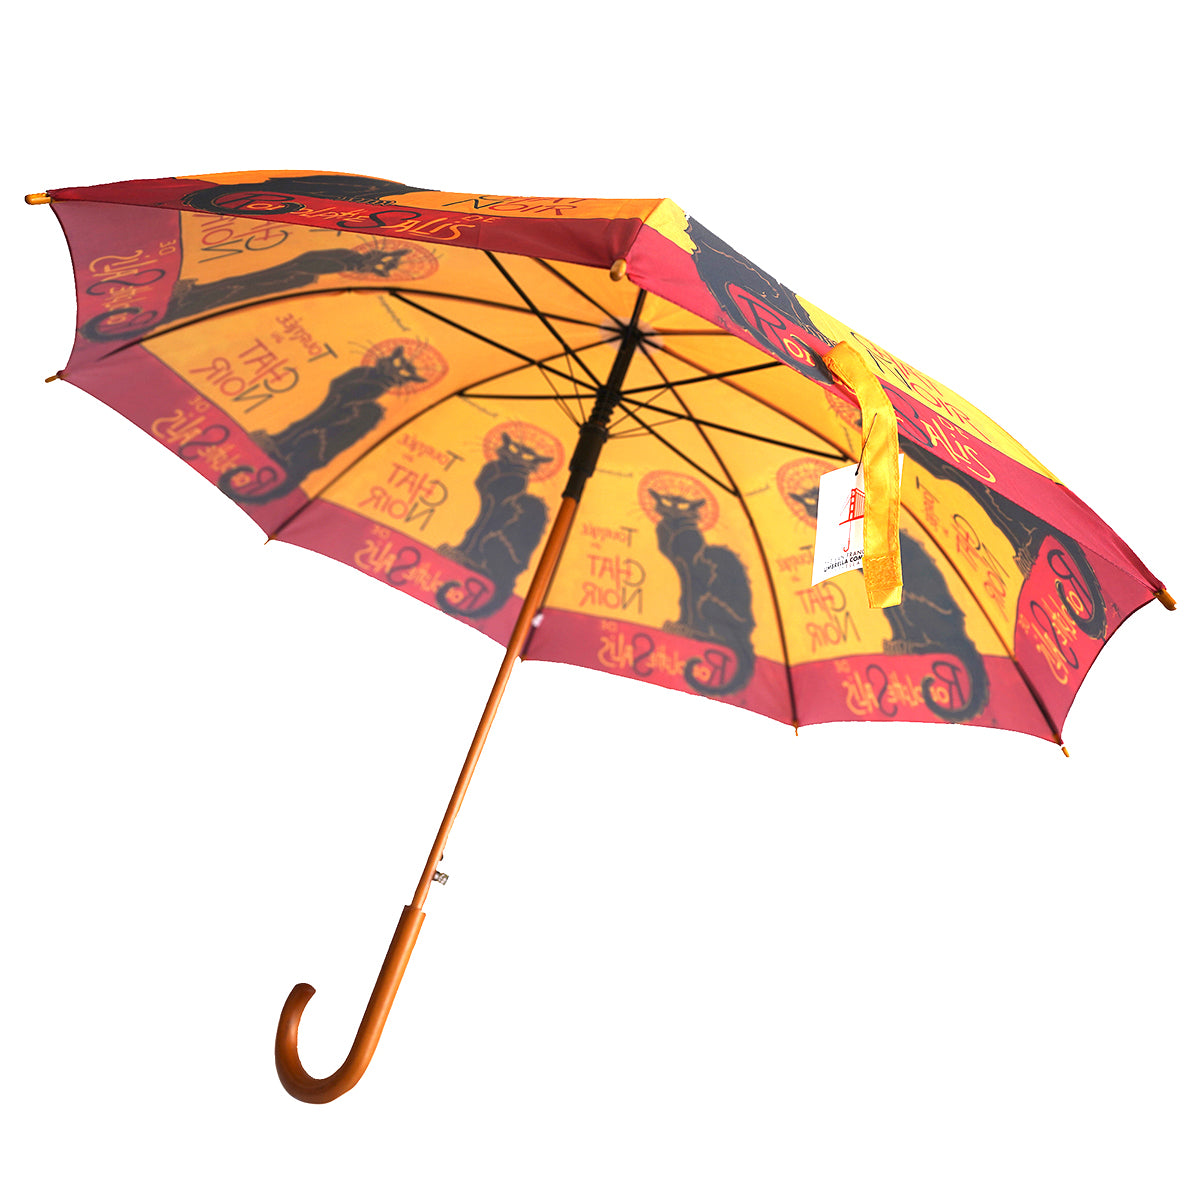 Rodolphe Salis' "Chat Noir" Wooden Stick Umbrella